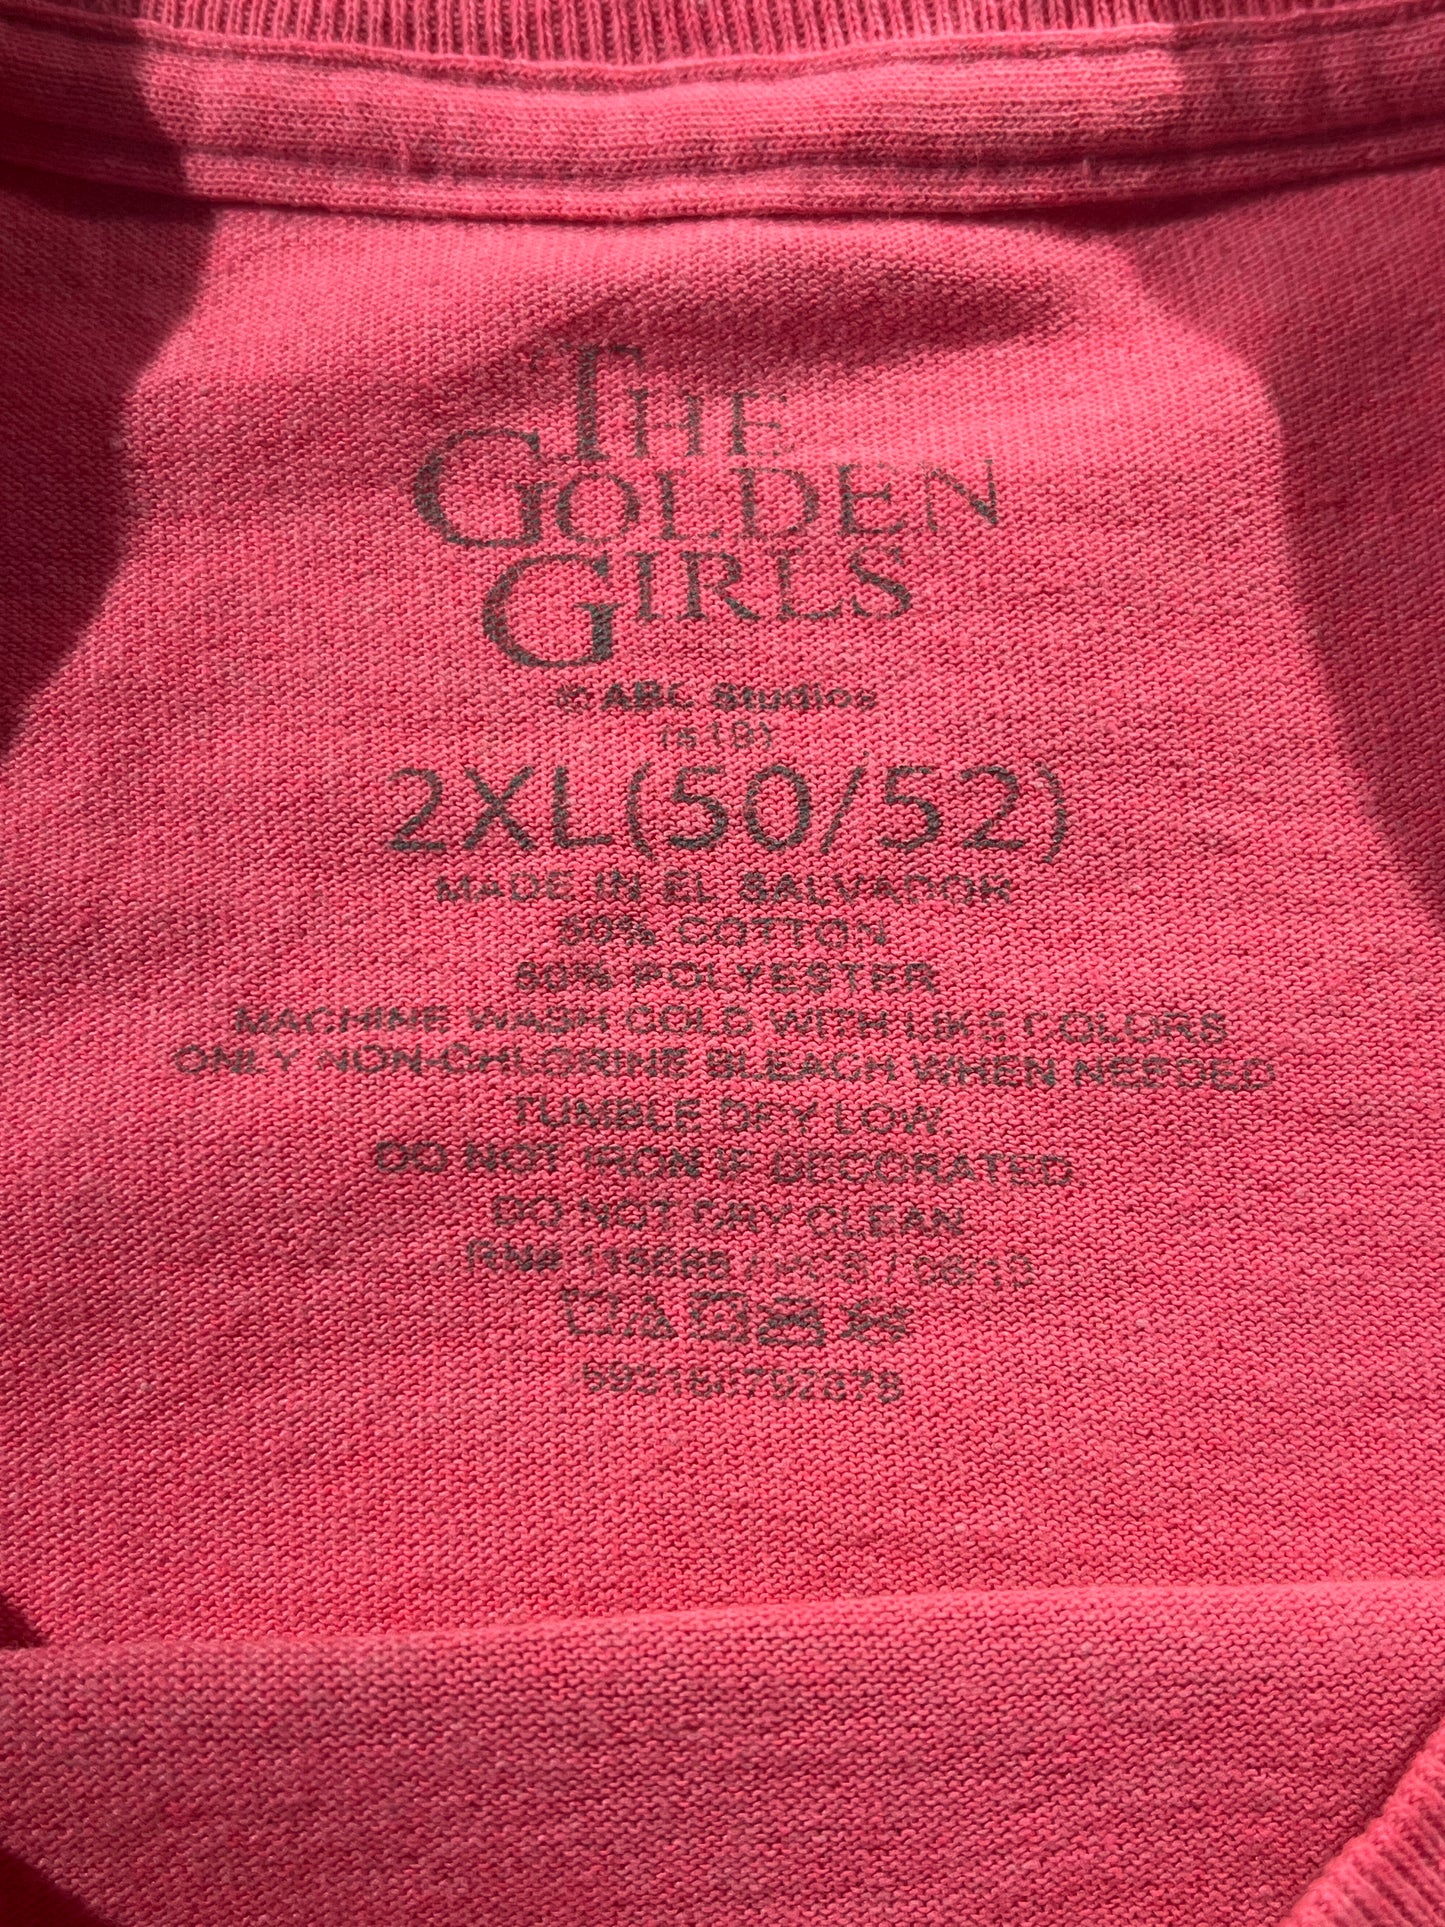 Vintage The Golden Girls T-Shirt